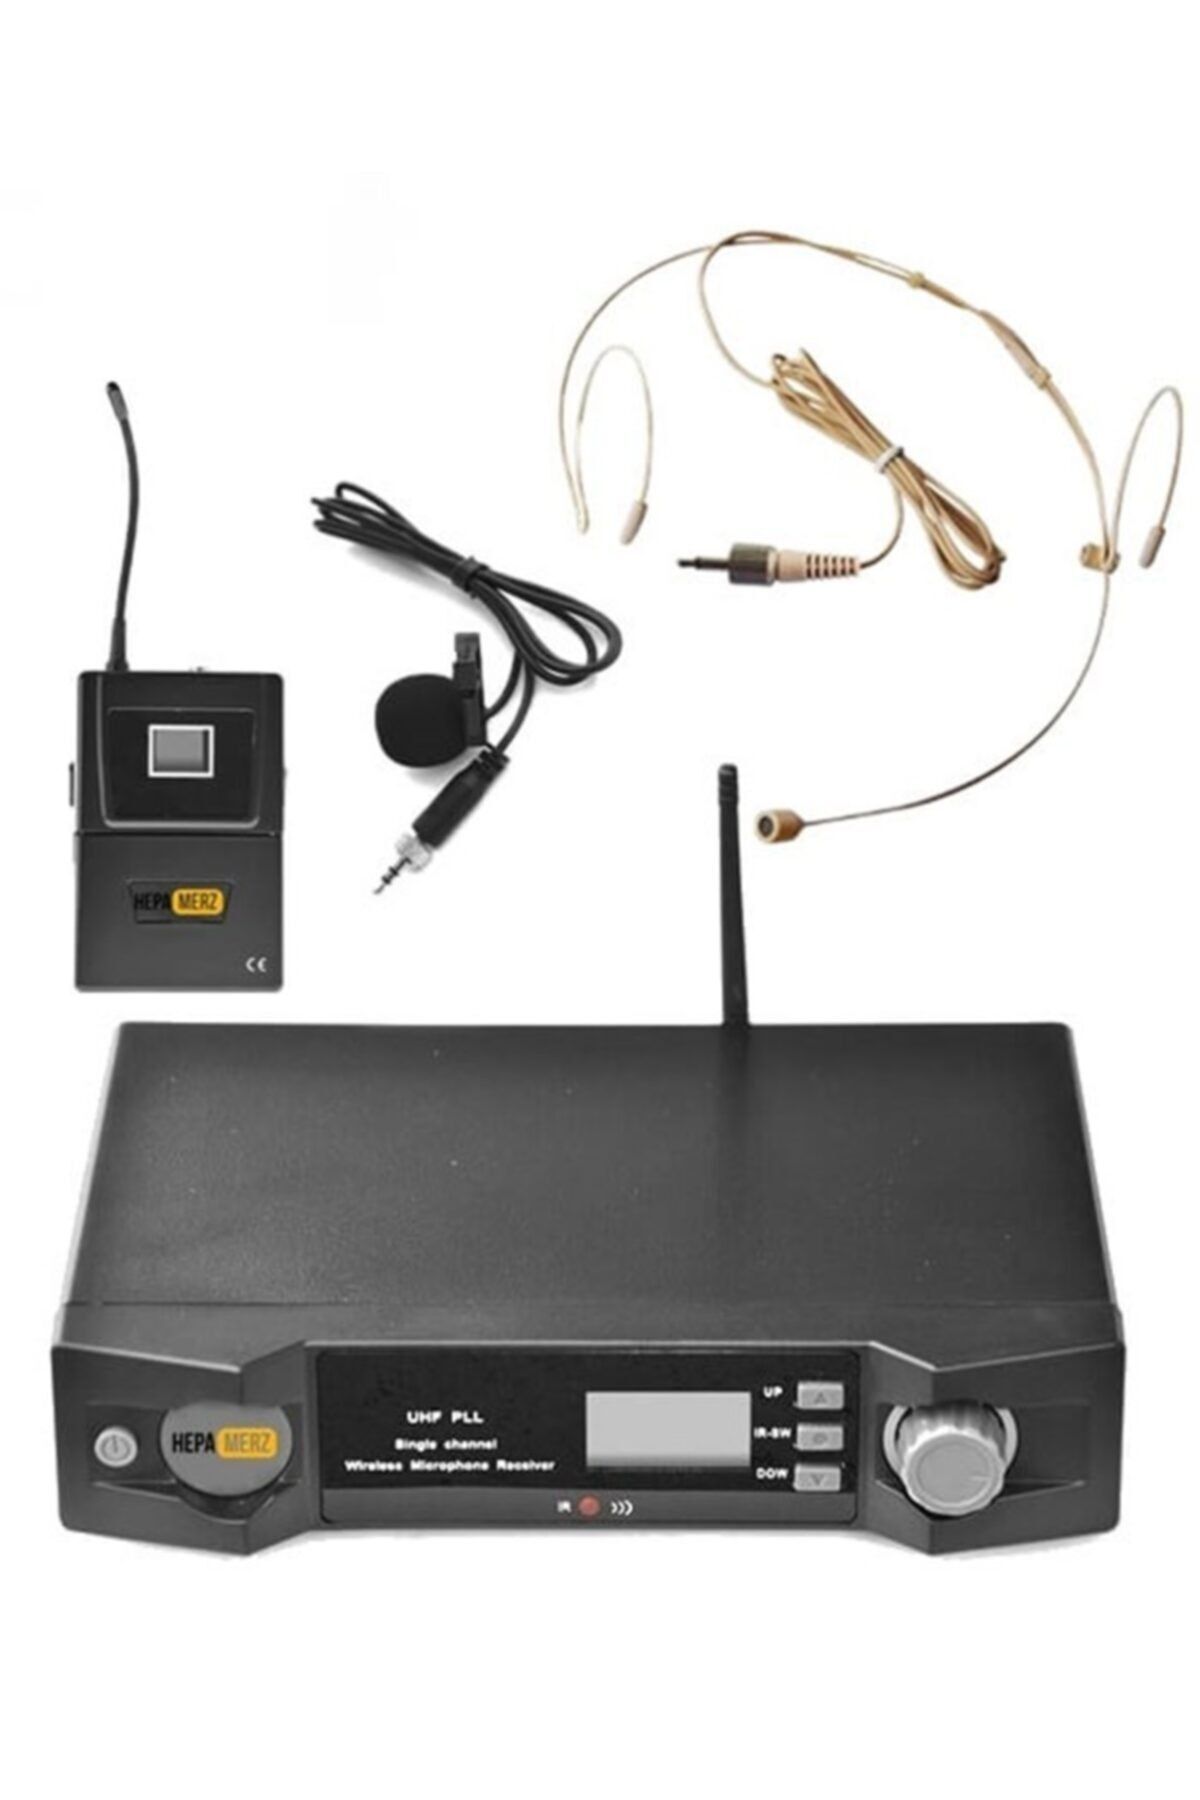 Hepa-Merz Hepa Merz Hm-8001h Dijital Uhf Kablosuz Headset Kafa Mikrofonu